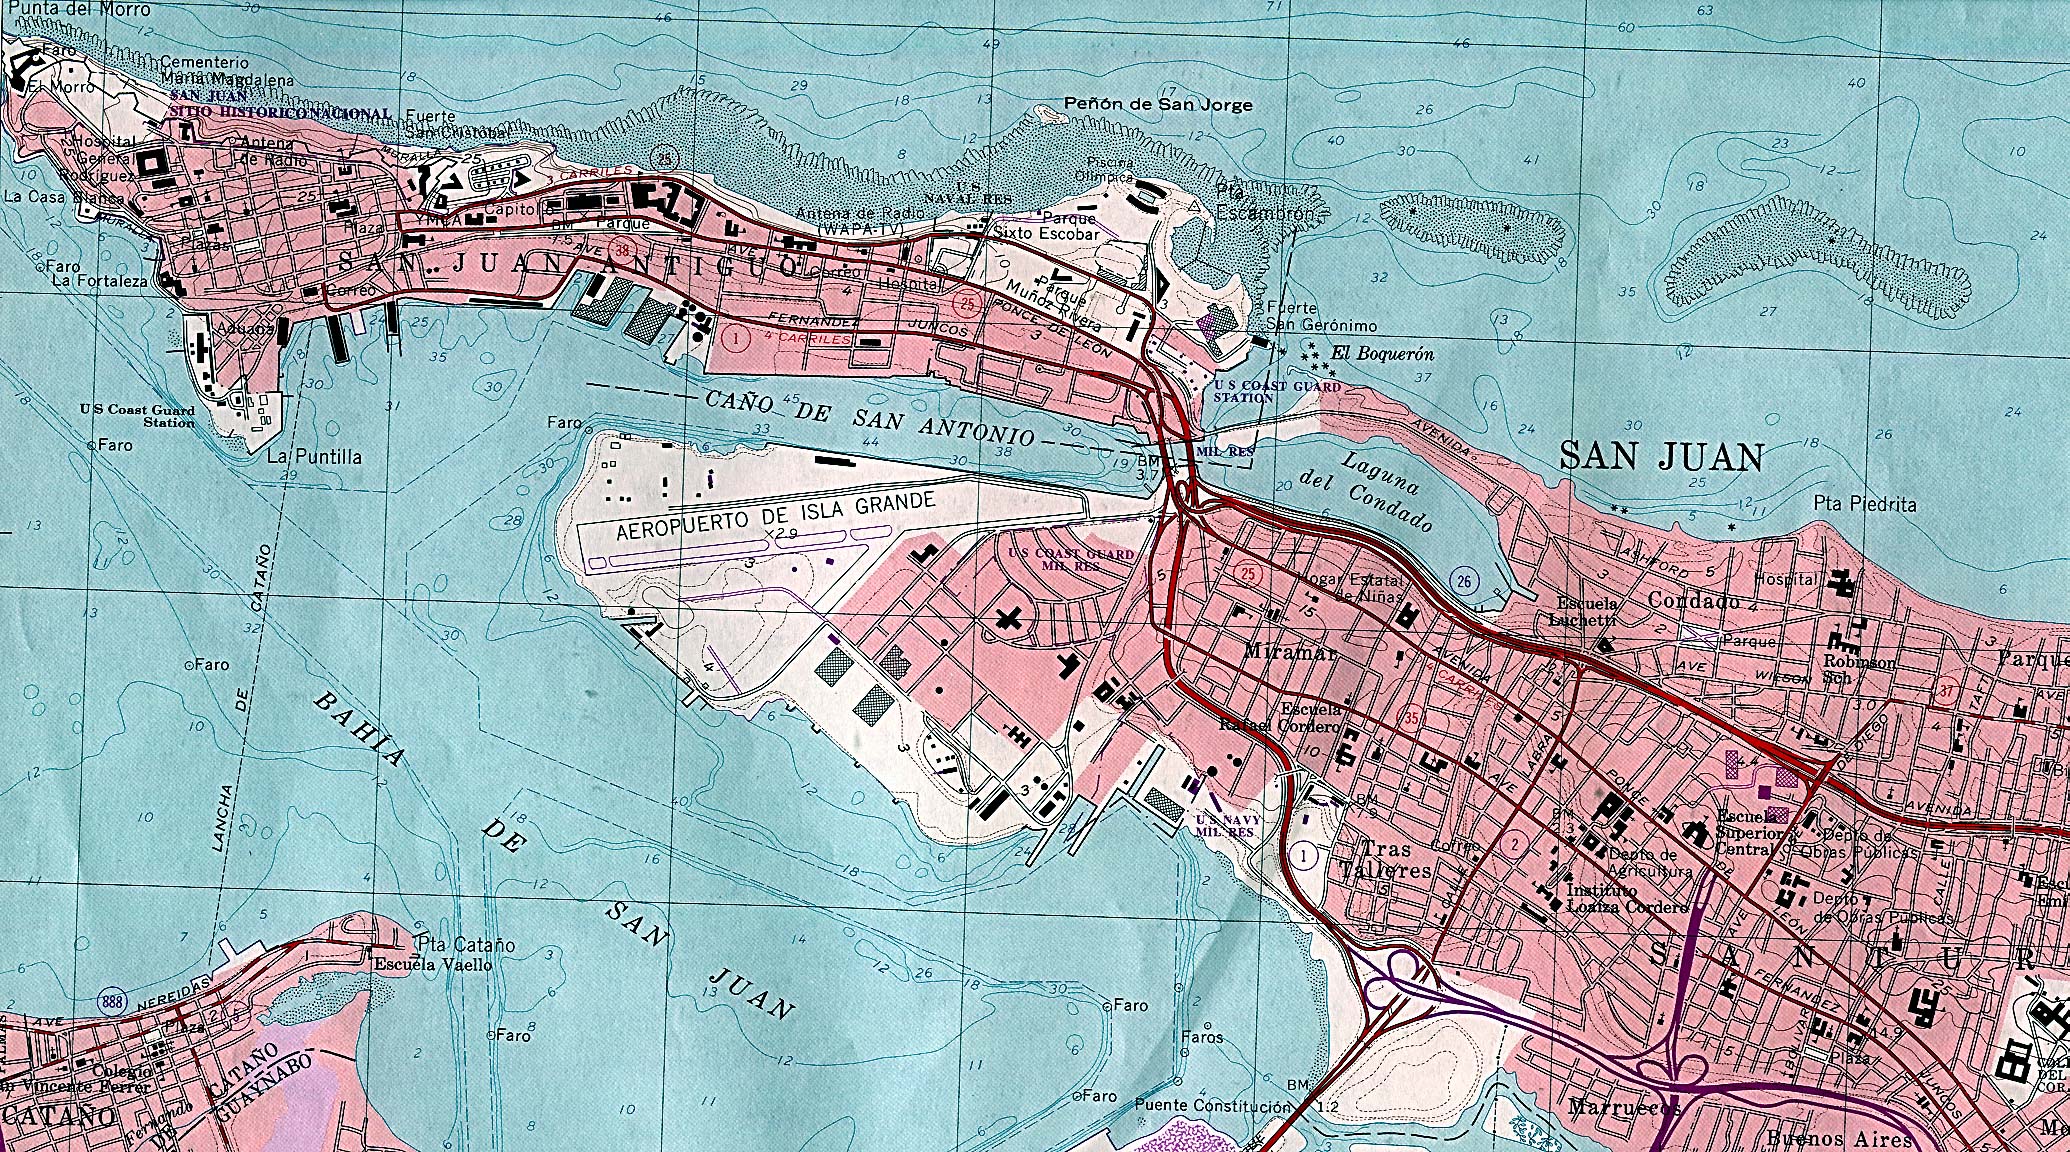 San Juan Topographic Map, Puerto Rico